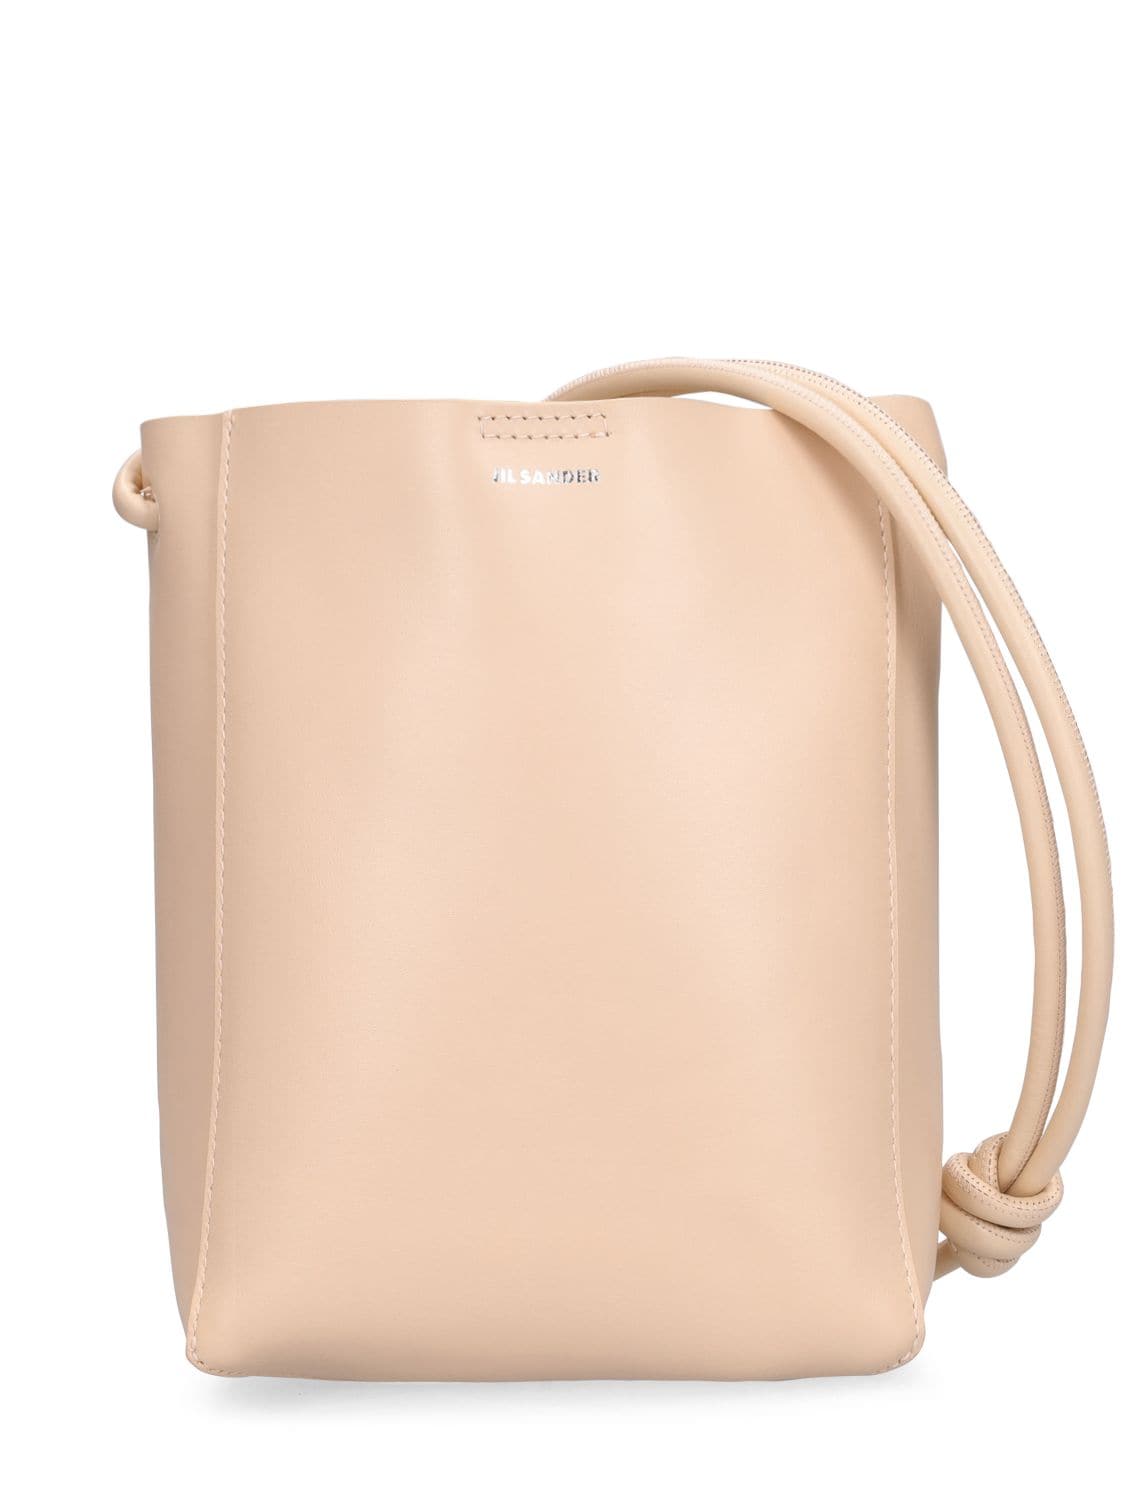 Image of Giro Leather Shoulder Bag